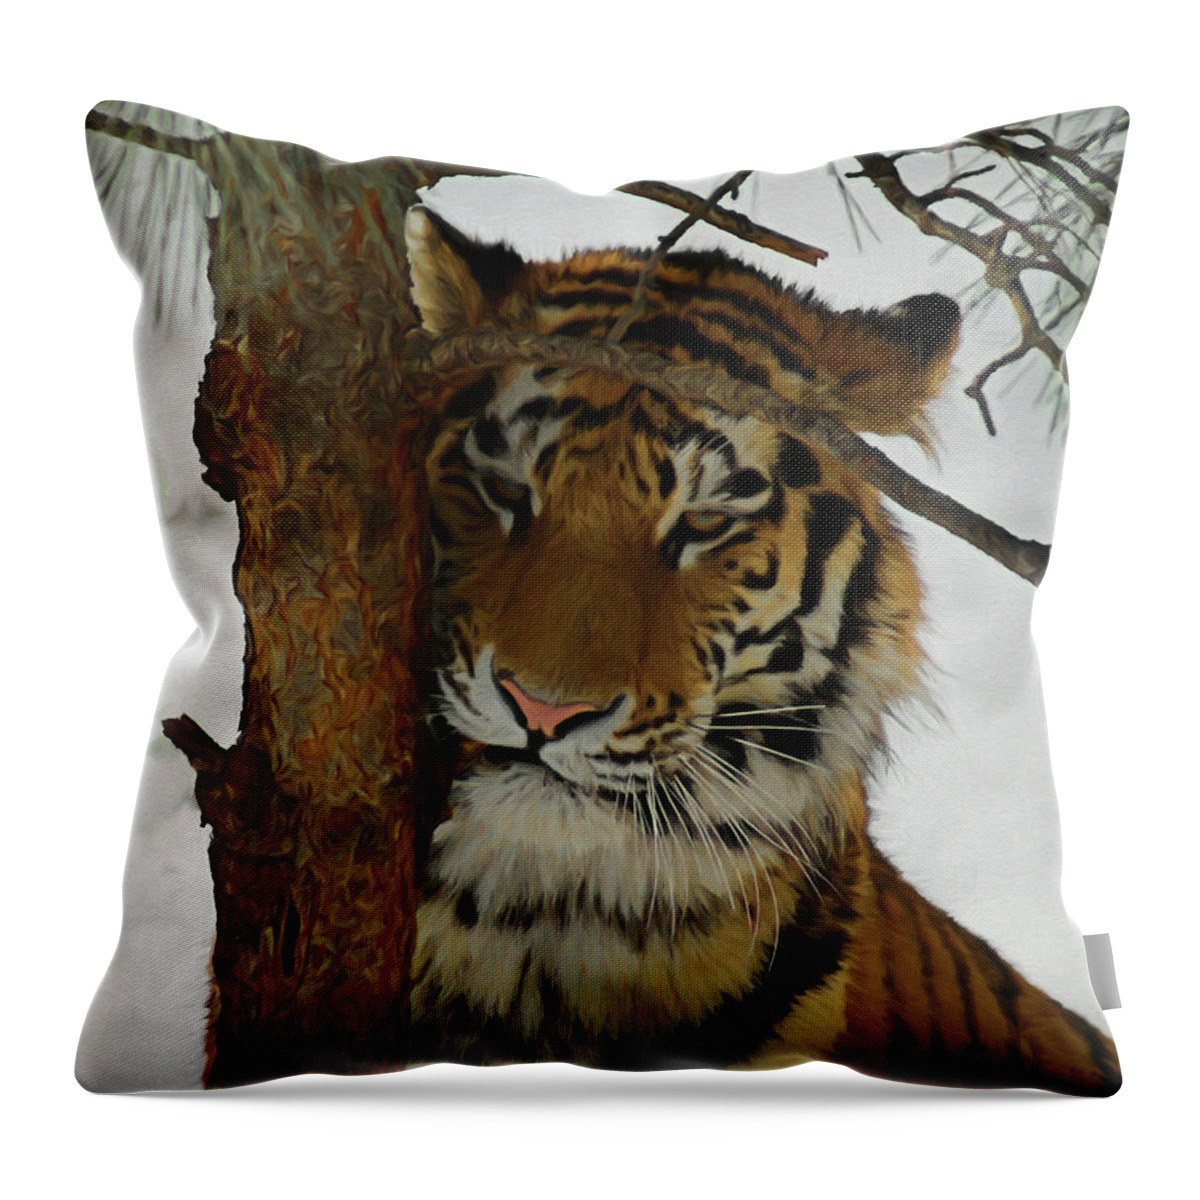 Tiger Throw Pillow featuring the digital art Tiger 2 DA by Ernest Echols